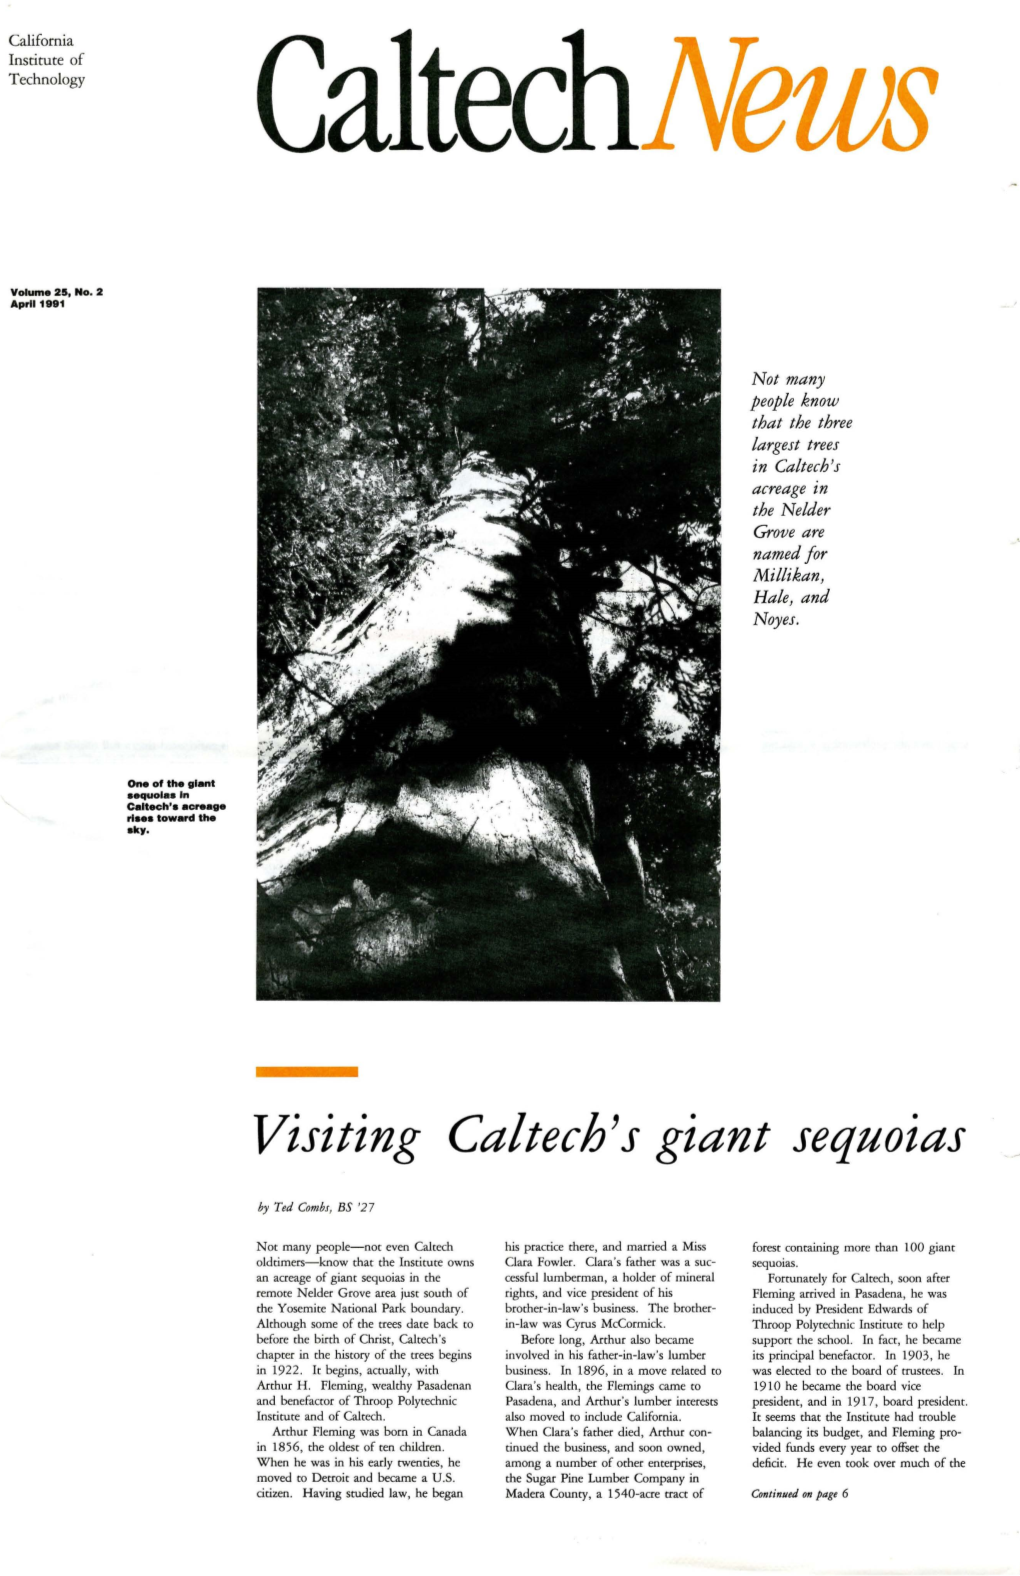 Visiting Caltech's Giant Sequoias